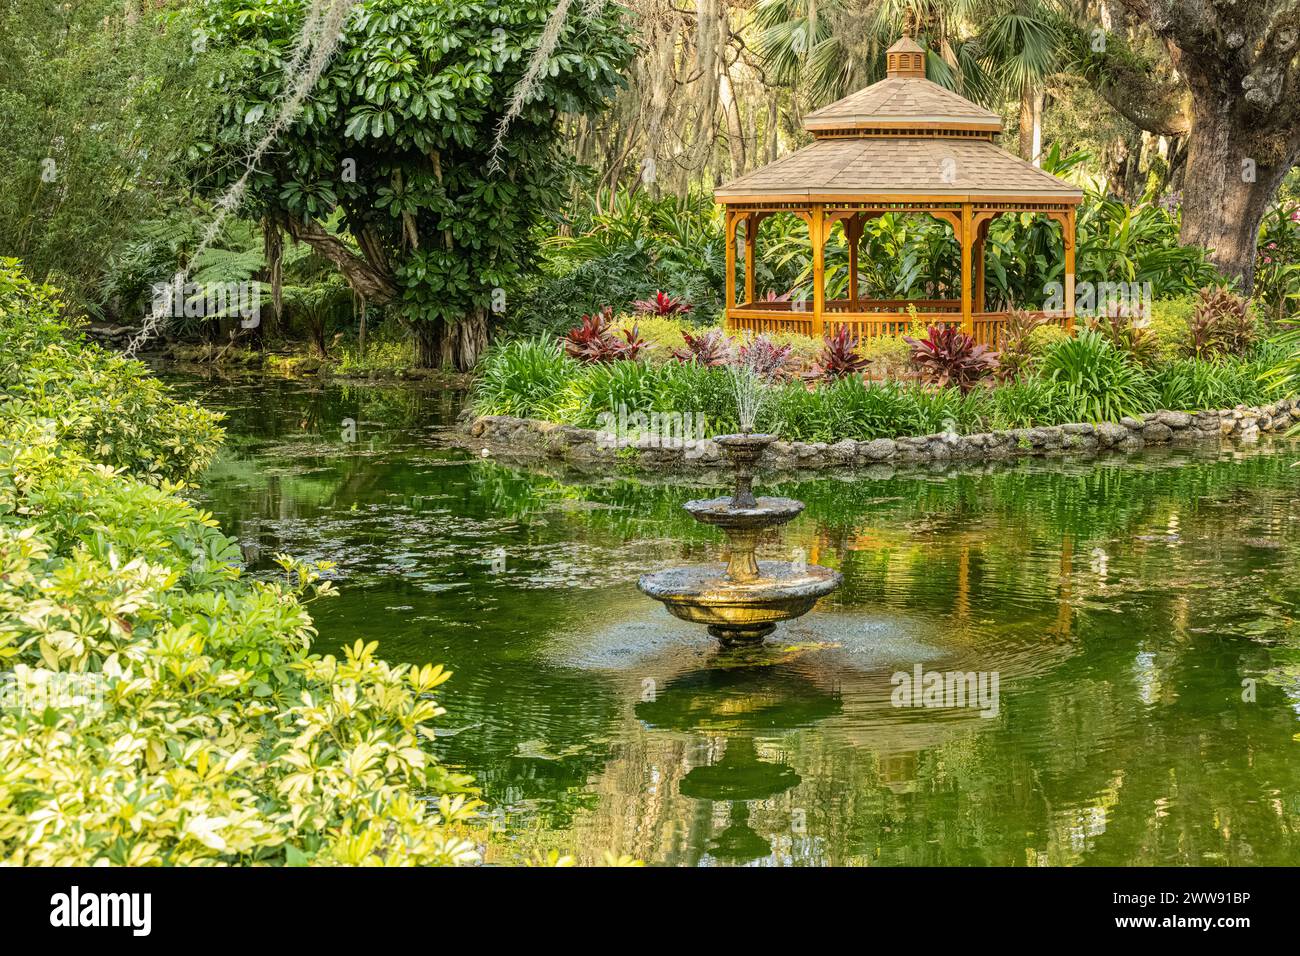 Giardino gazebo e fontana presso gli squisiti giardini formali del Washington Oaks Gardens State Park a Palm Coast, Florida. (USA) Foto Stock